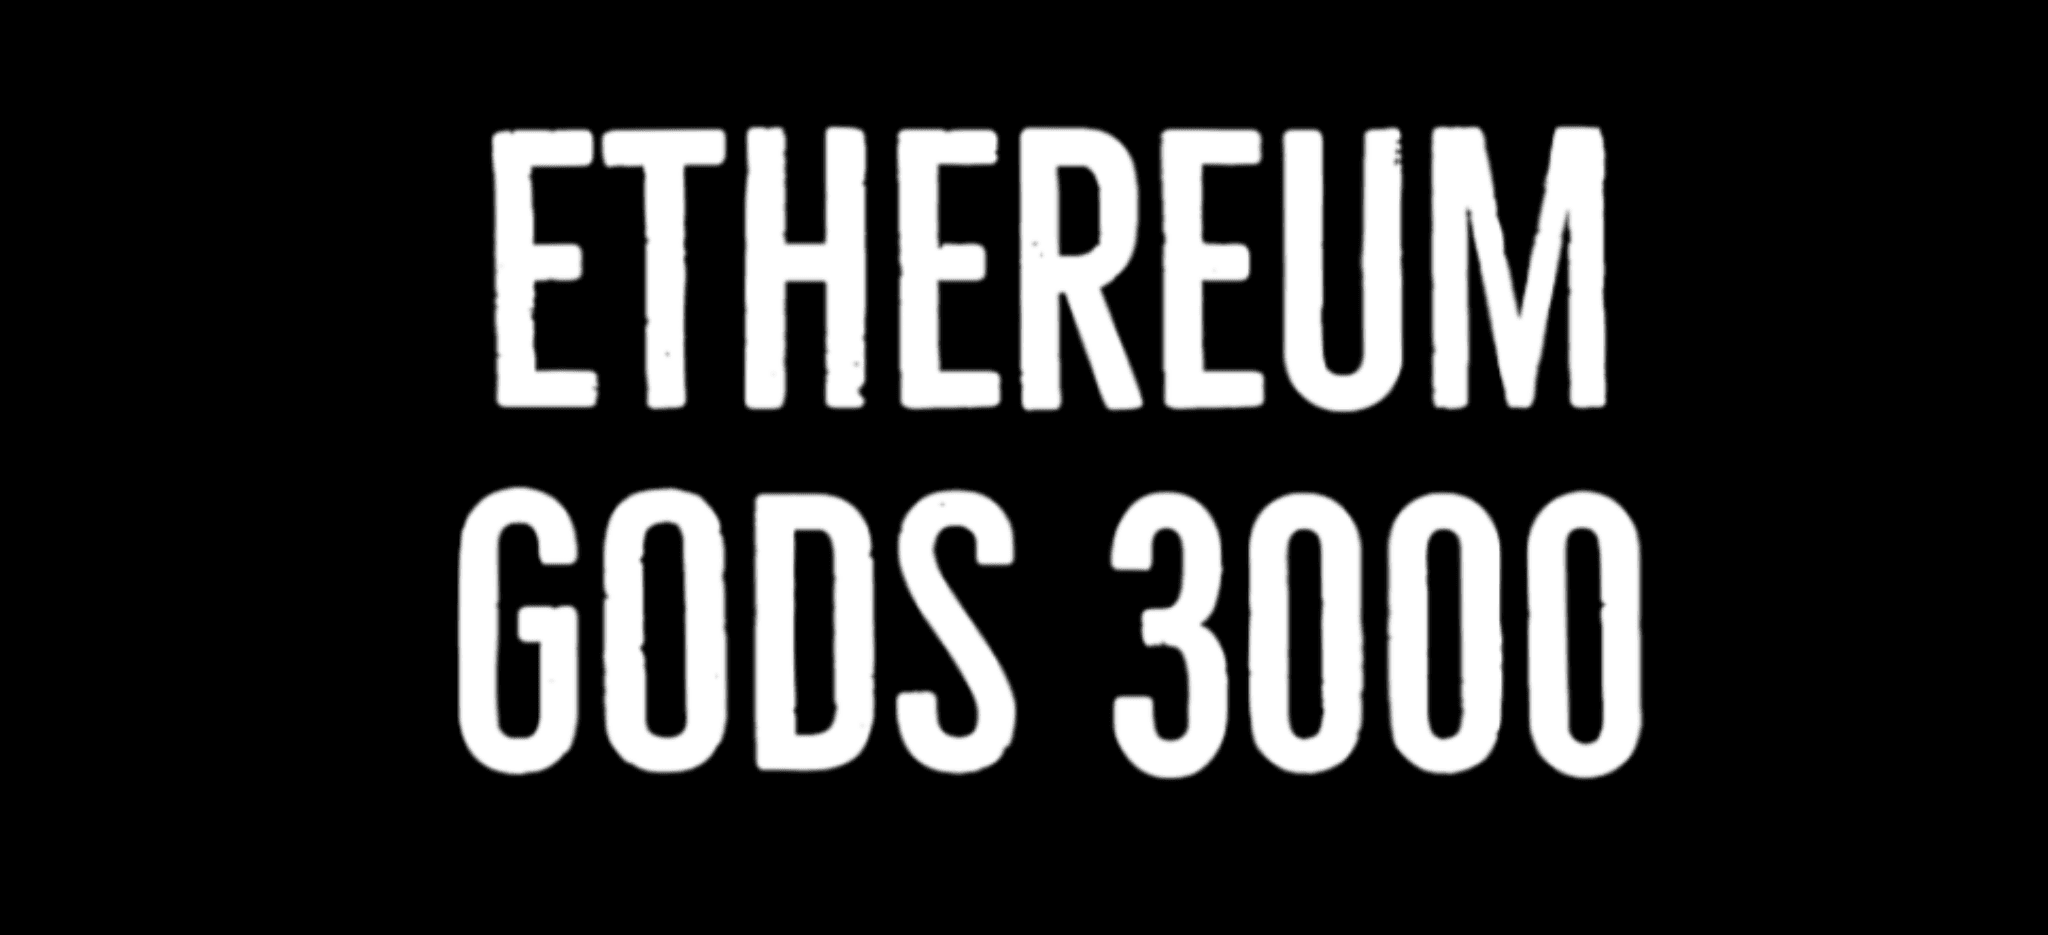 Ethereum Gods 3000